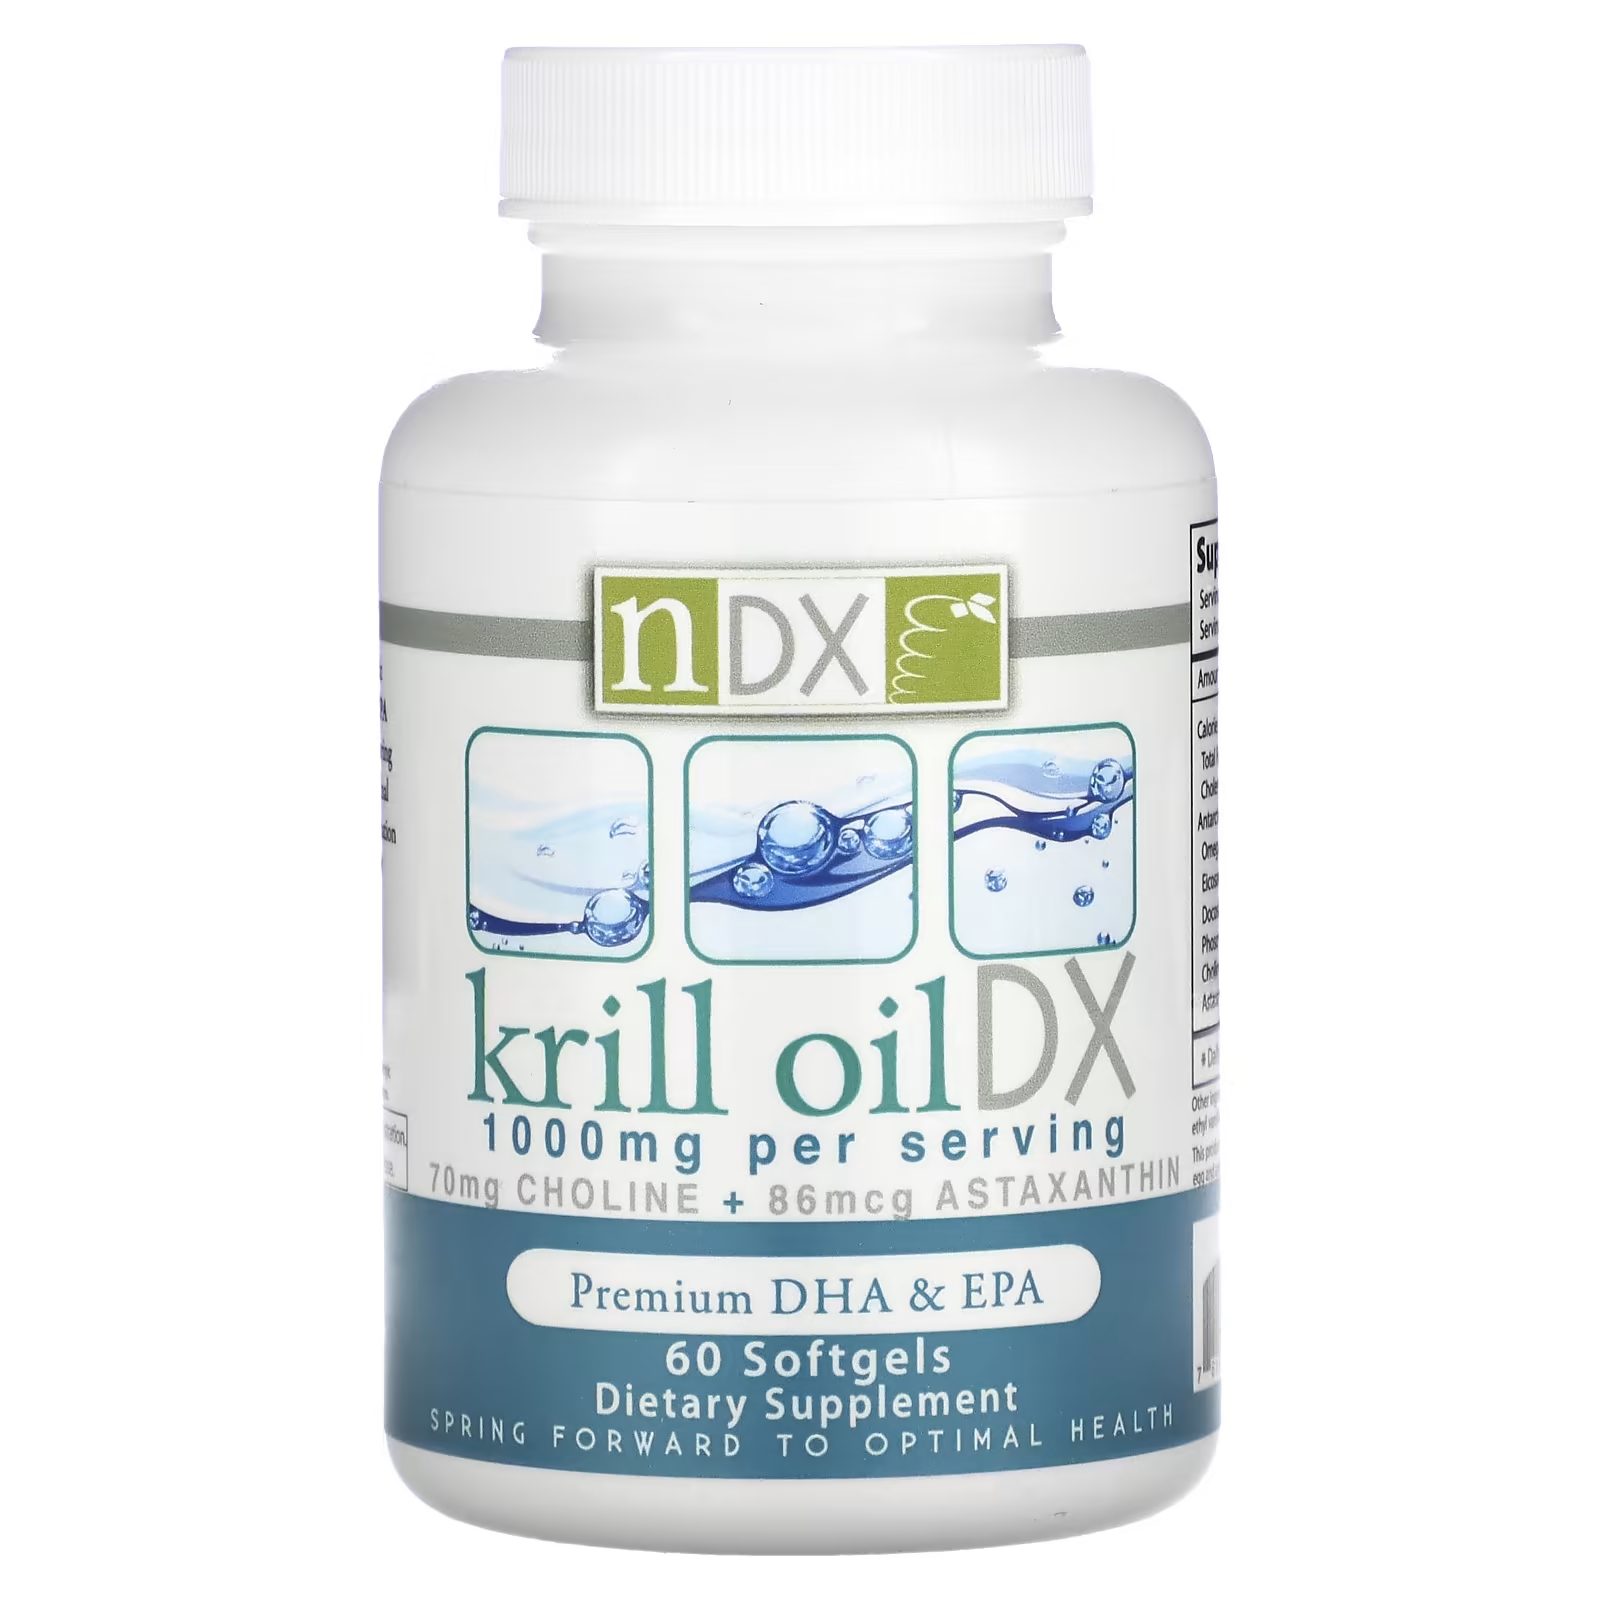 Пищевая добавка Natural Dynamix Krill Oil DX Premium DHA и EPA 1000 мг, 60 мягких таблеток пищевая добавка natural dynamix krill oil dx premium dha и epa 1000 мг 60 мягких таблеток